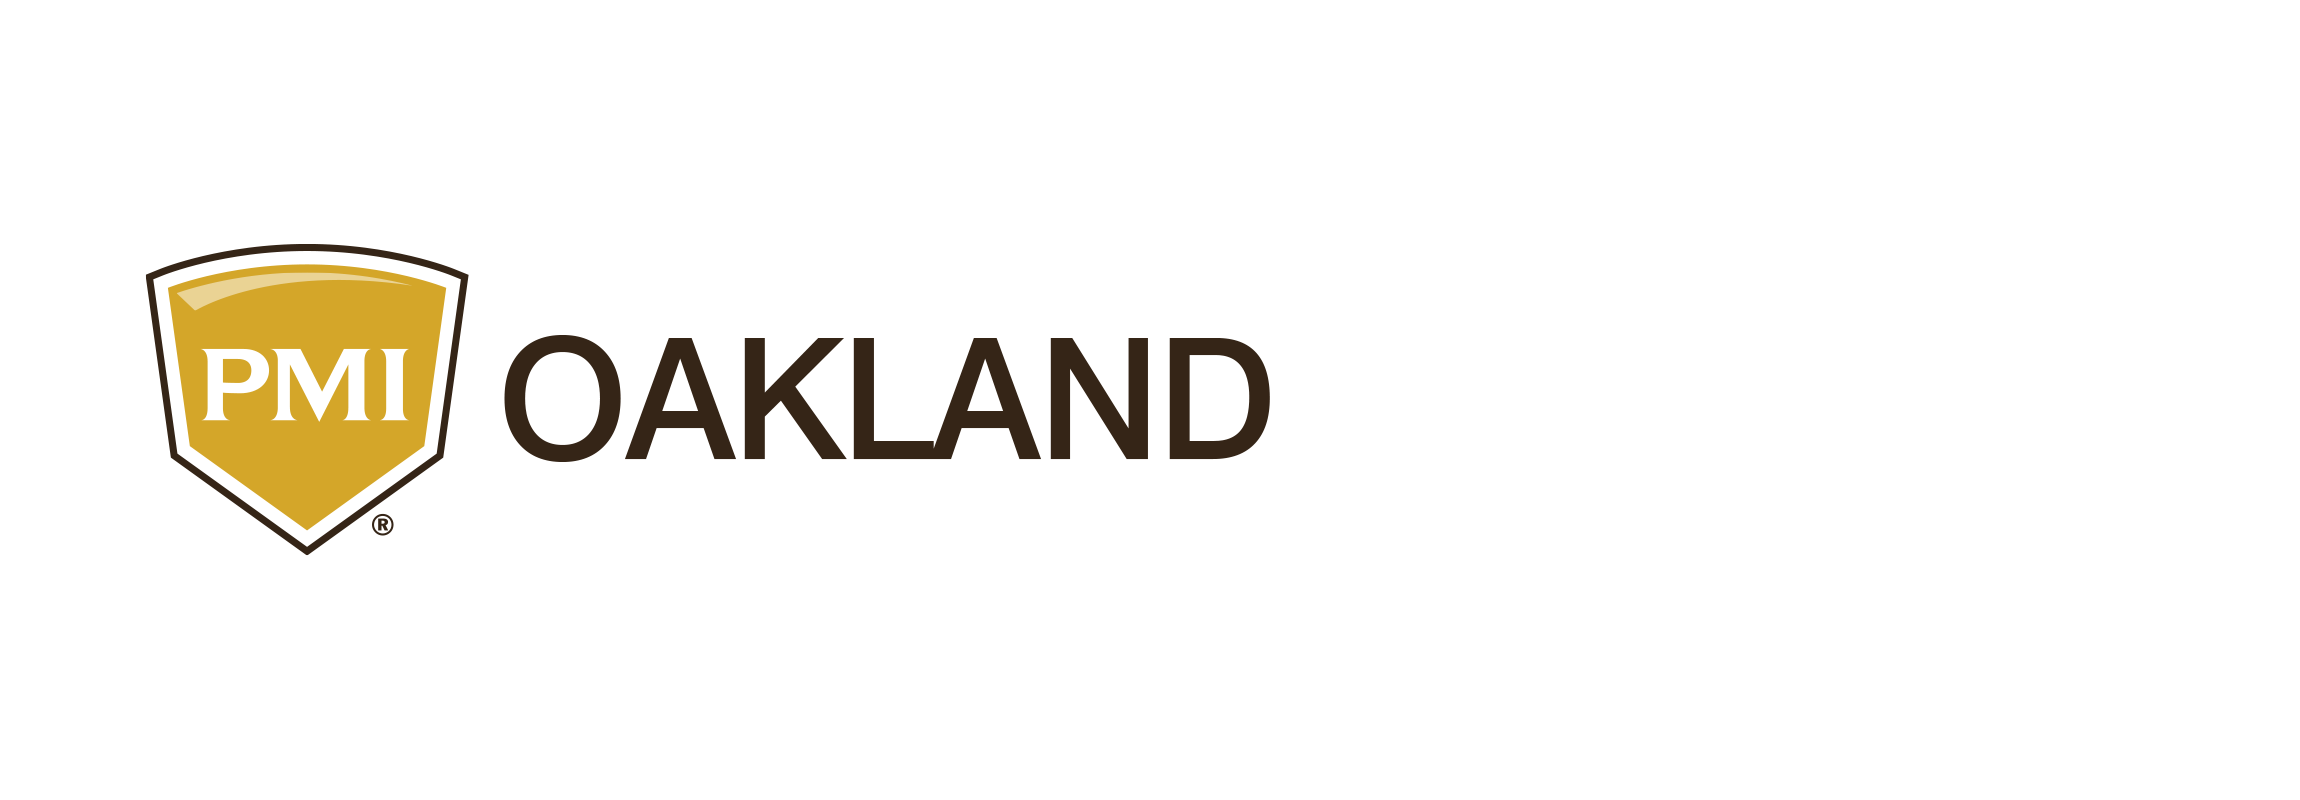 PMI Oakland logo